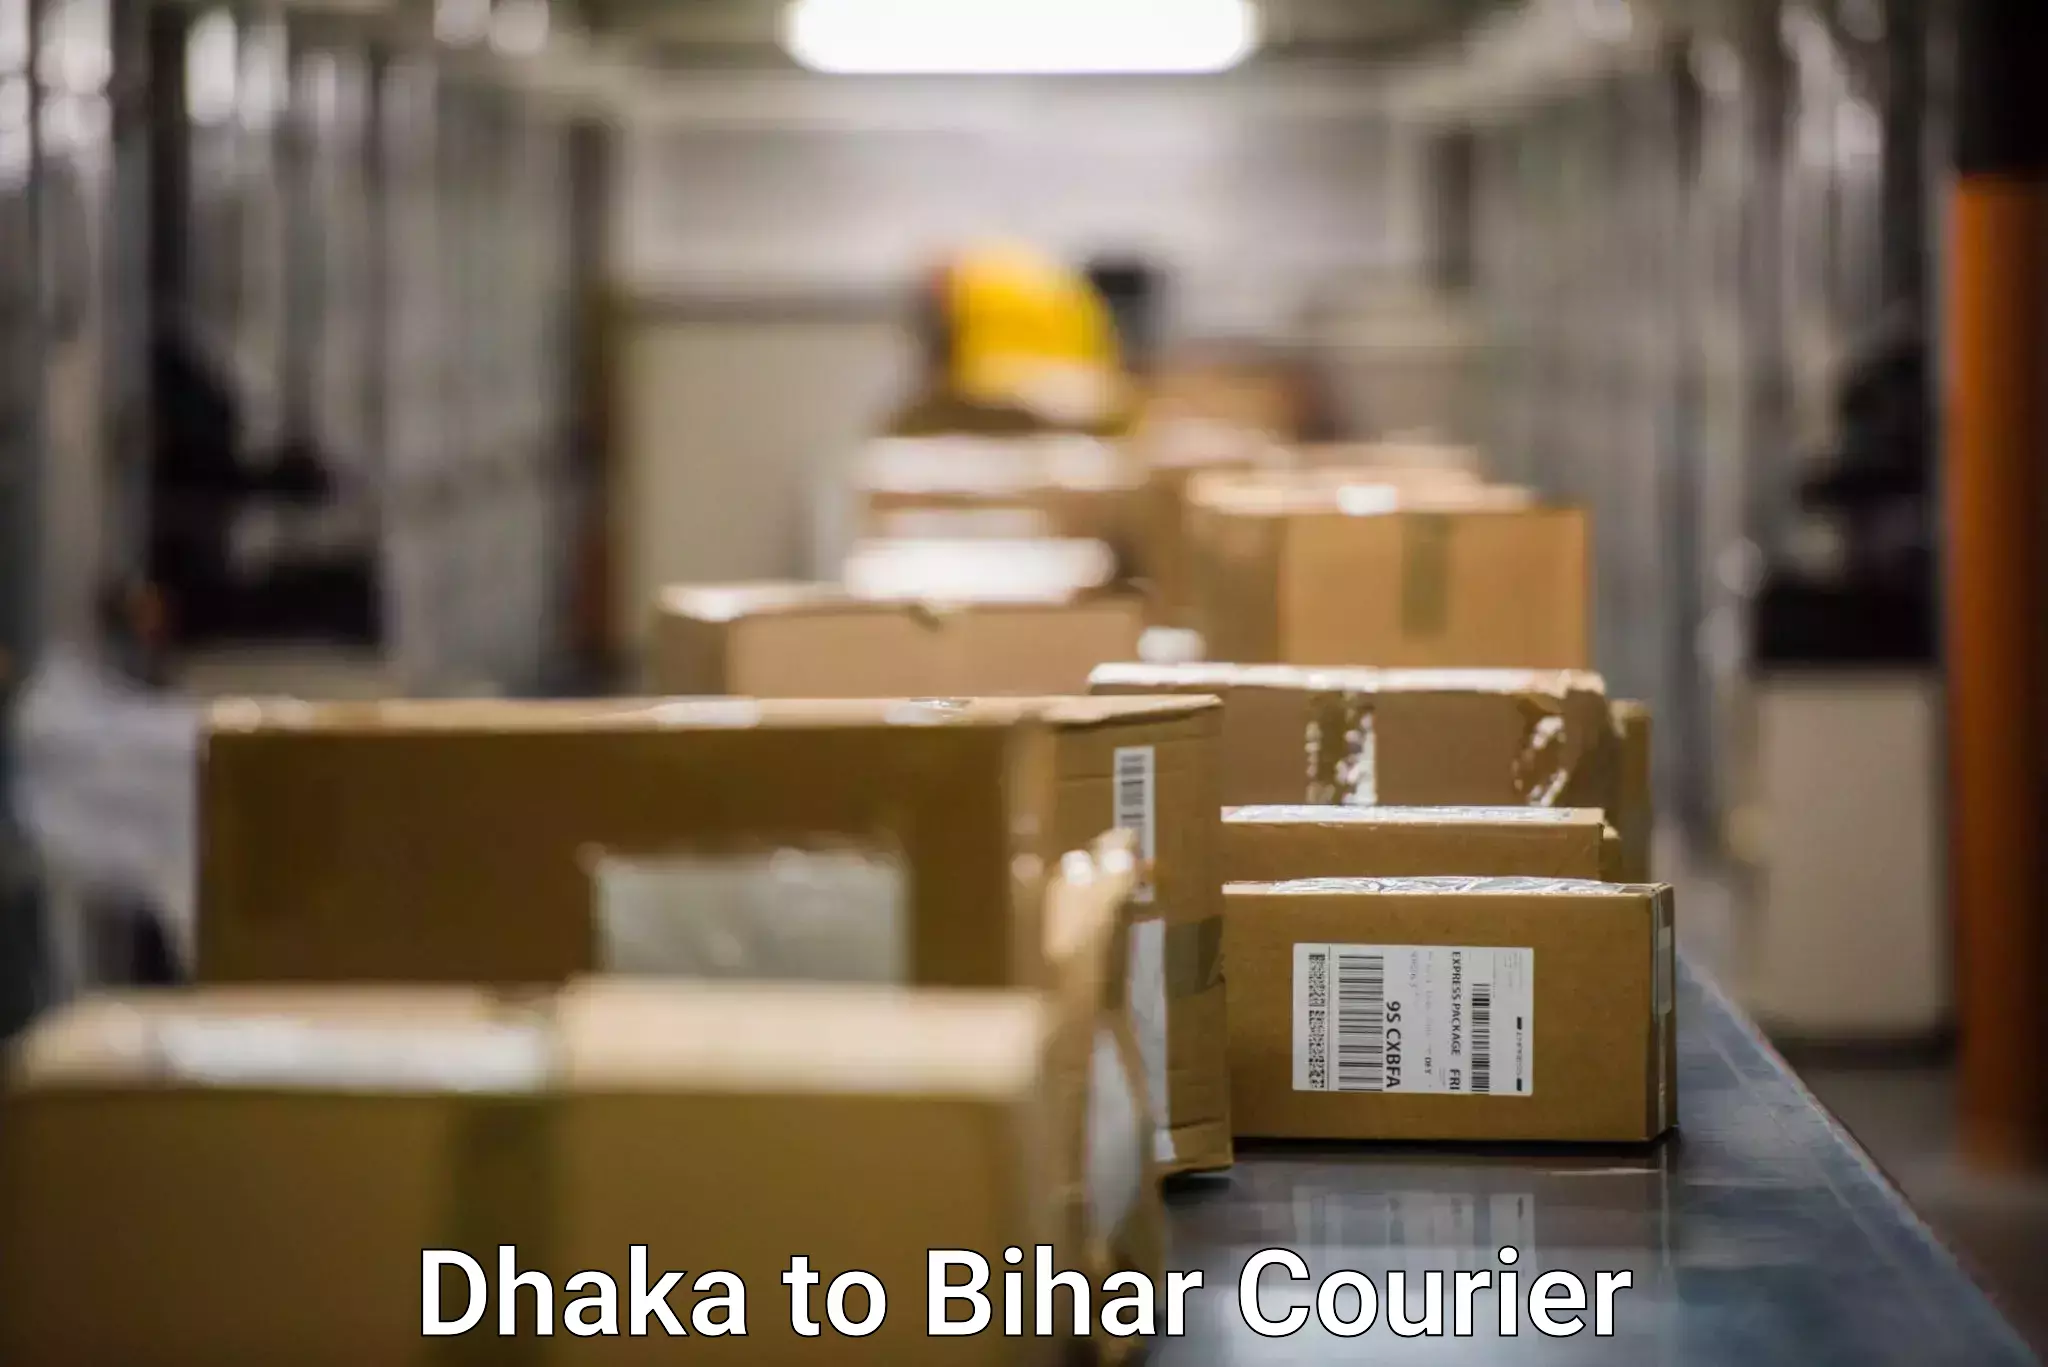 International parcel service Dhaka to Piro